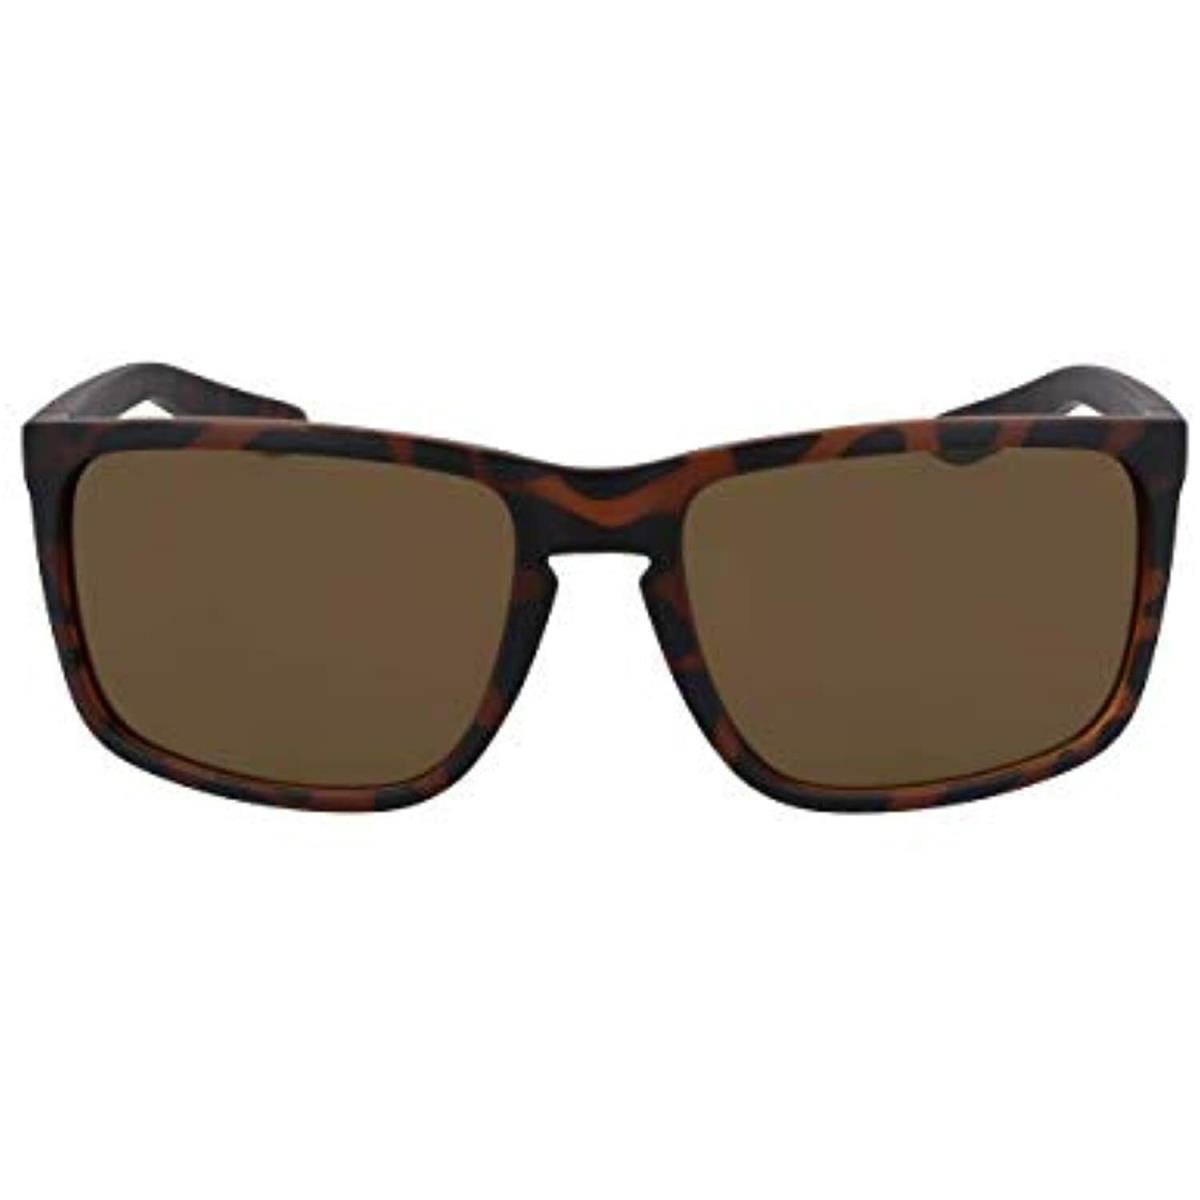 Dragon Melee XL 246 Matte Tortoise Sunglasses with Bronze Lenses 61mm